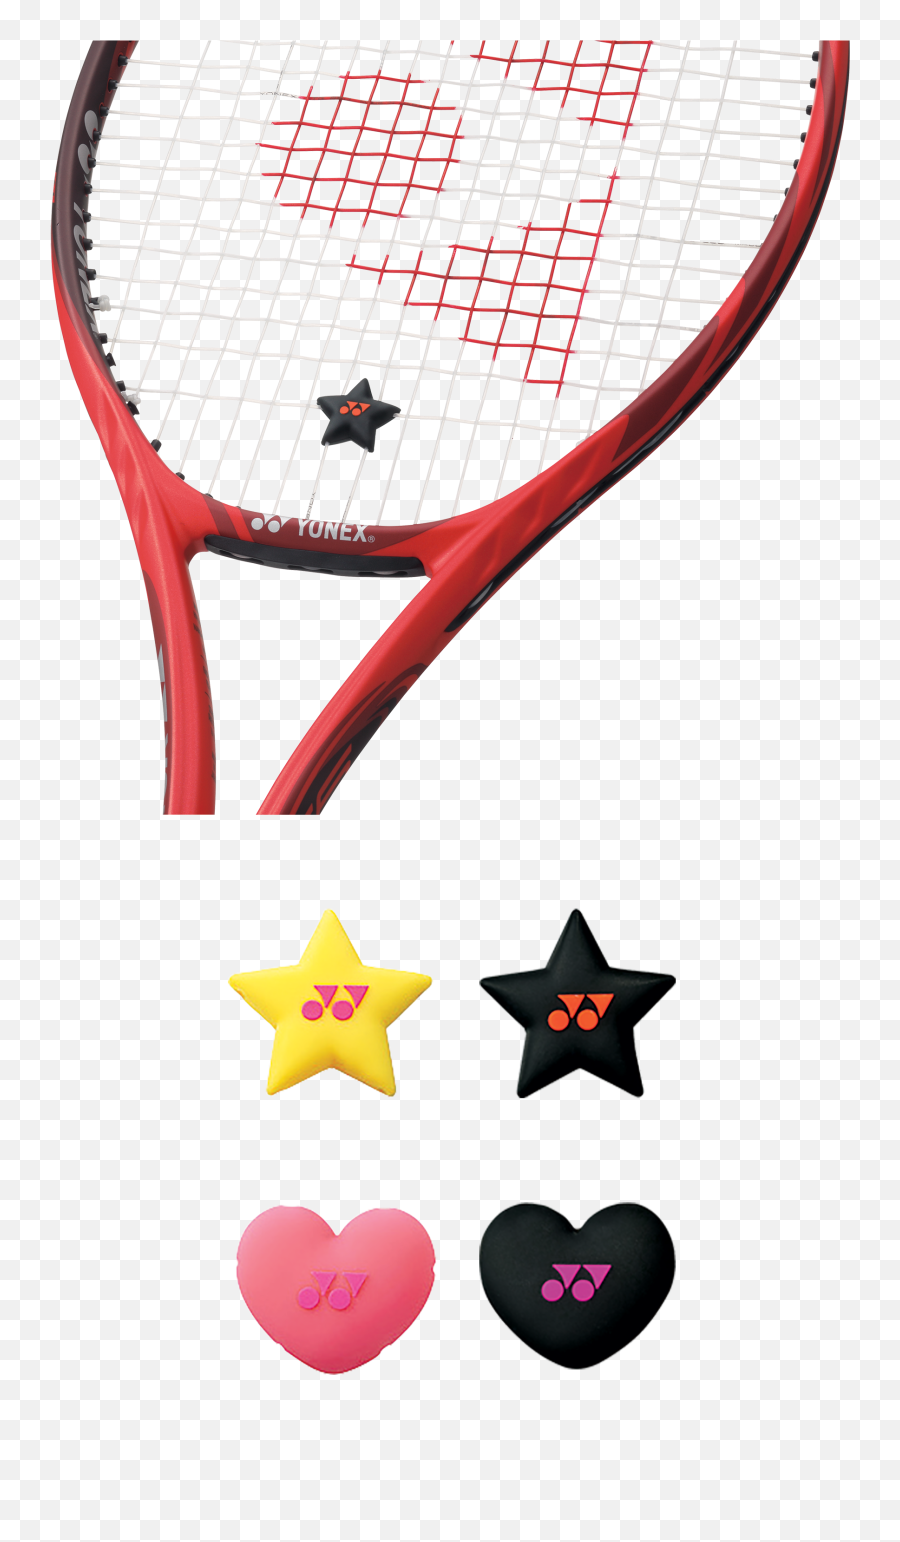 Sporting Goods Tennis Other Tennis 6 Pack Details About Emoji,Tennis Racquet Dampener Emojis